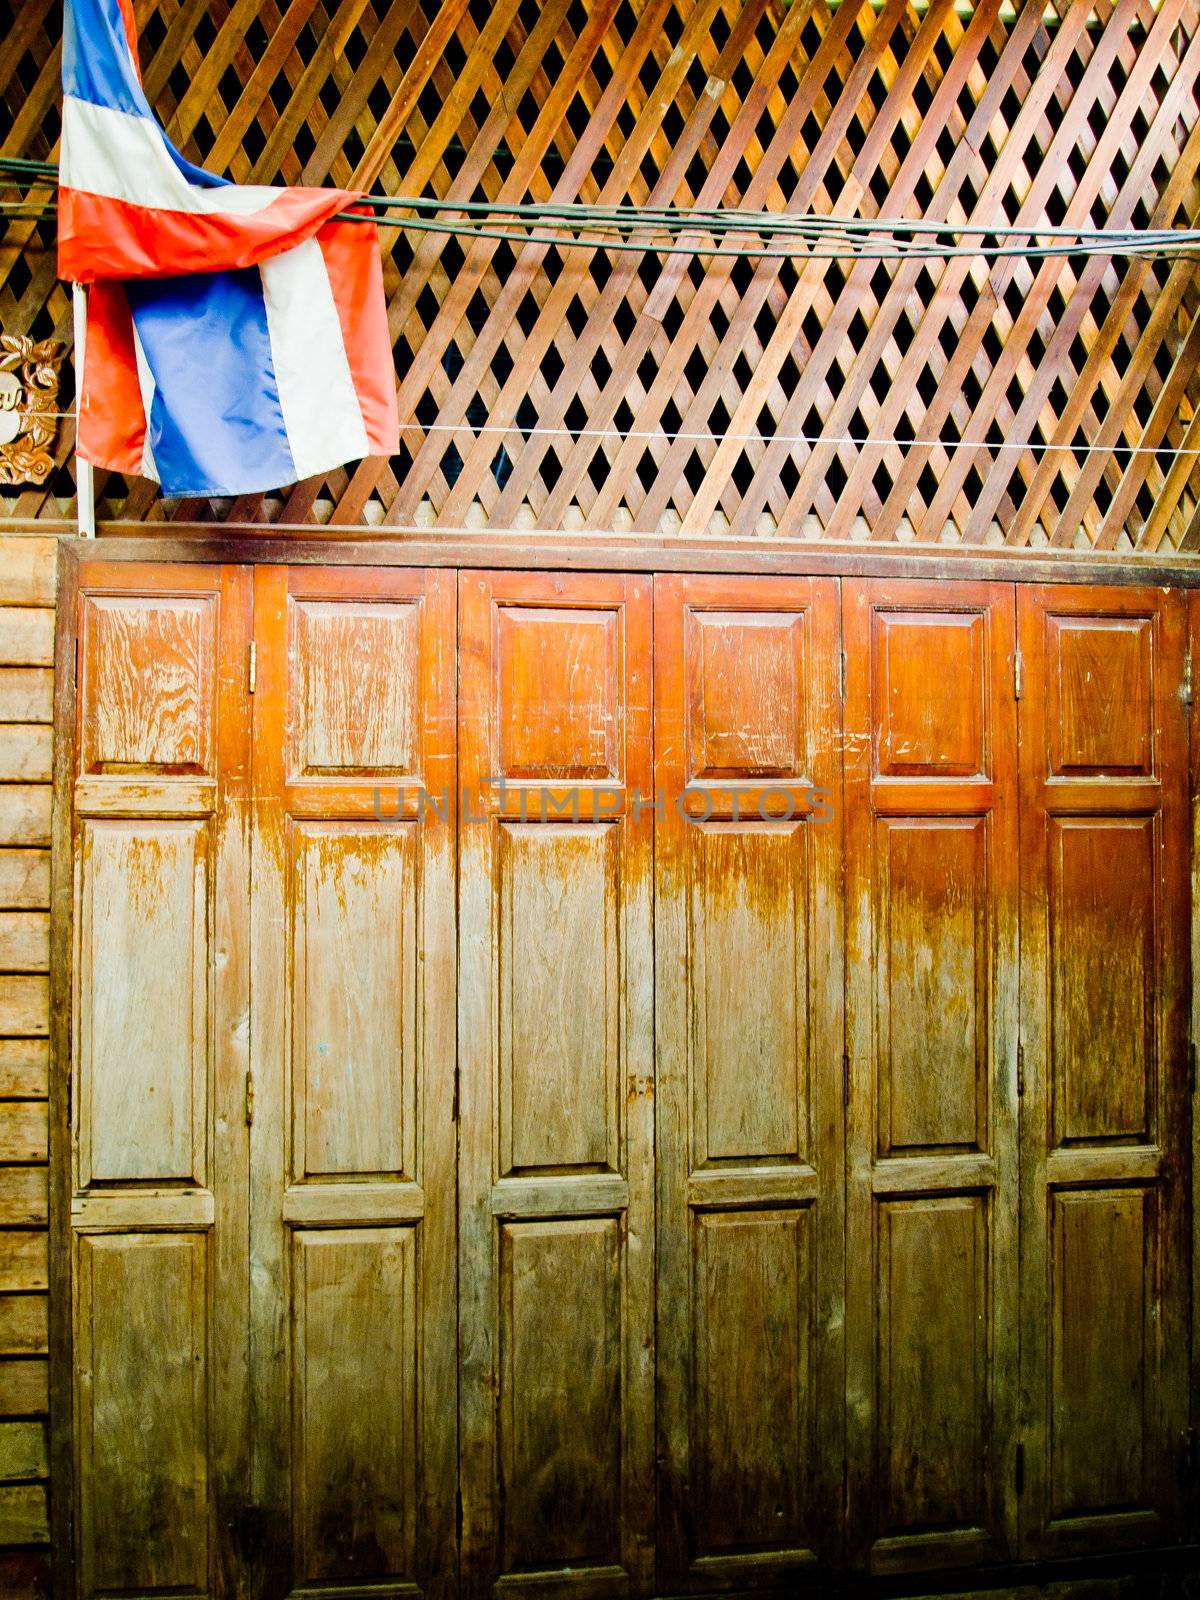 Old wood door with Thailand flag